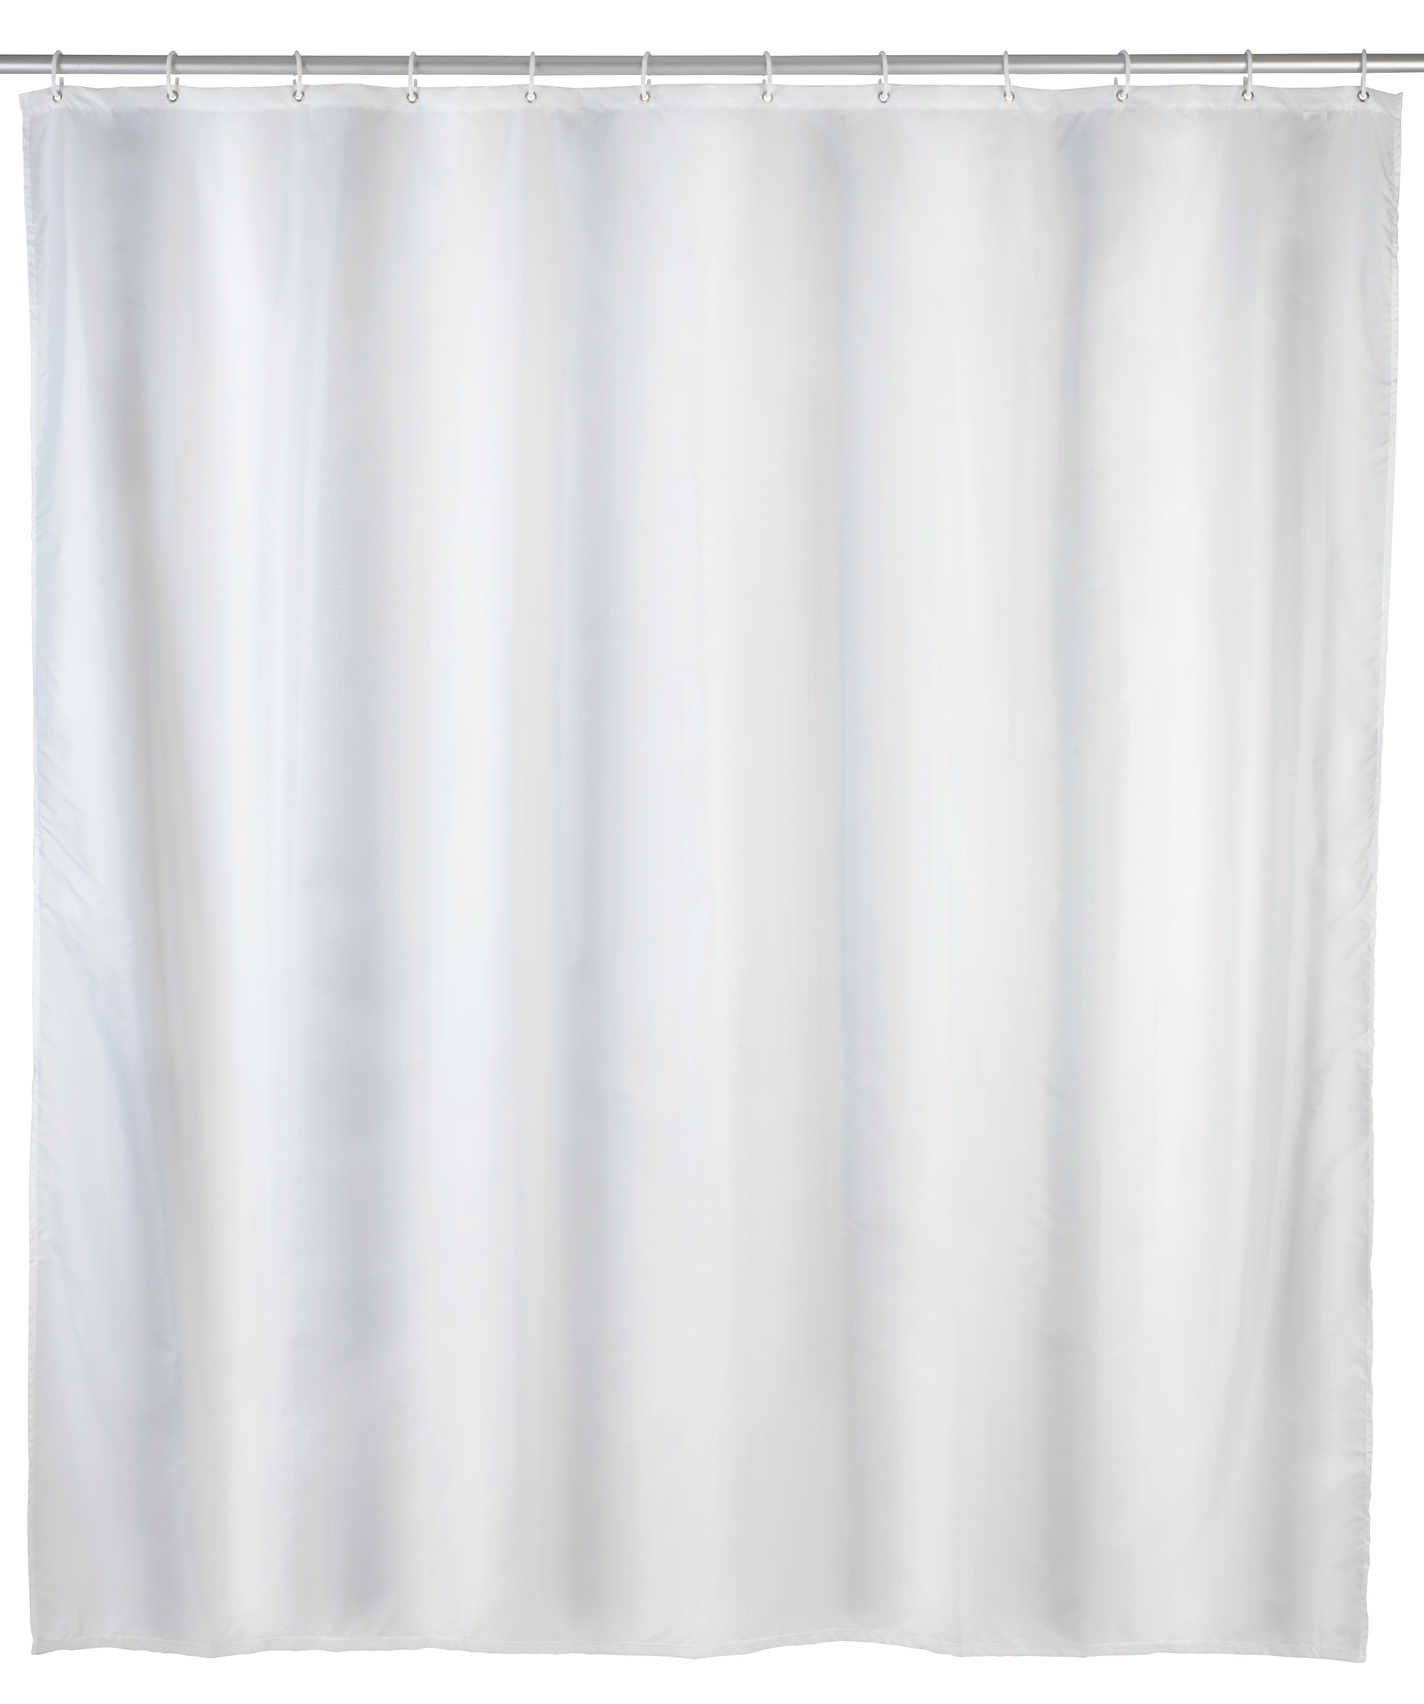 Rideau de douche 180x200 blanc polyester